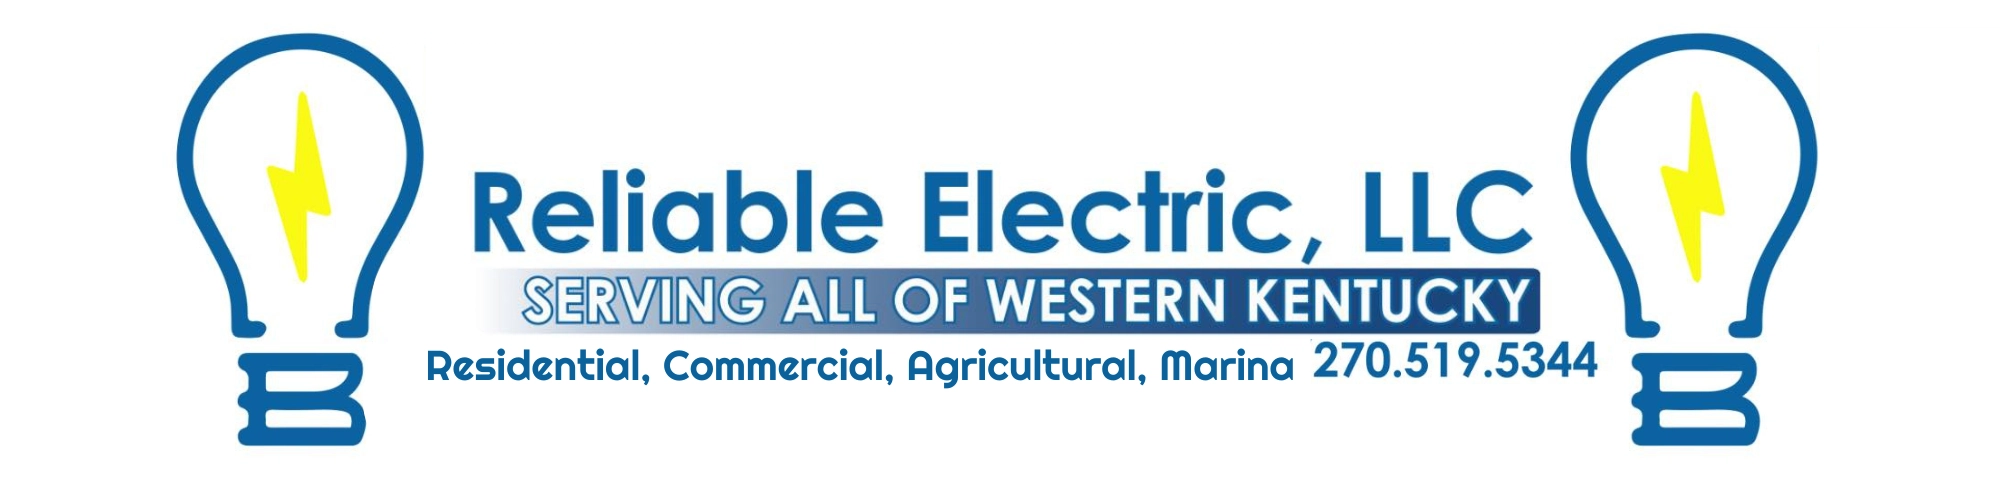 Reliable Electric, LLC Logo